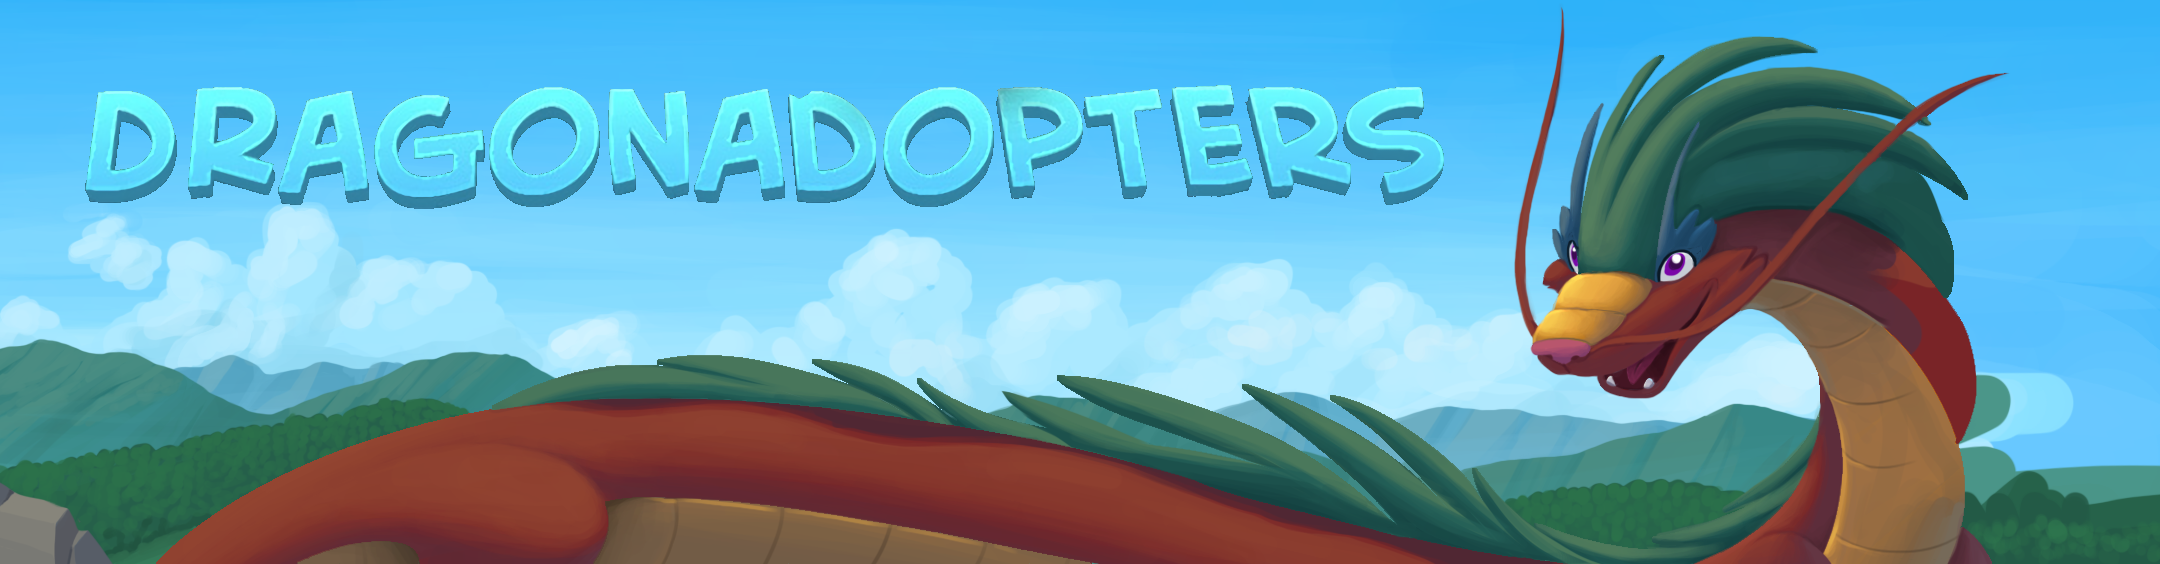 DragonAdopters Banner